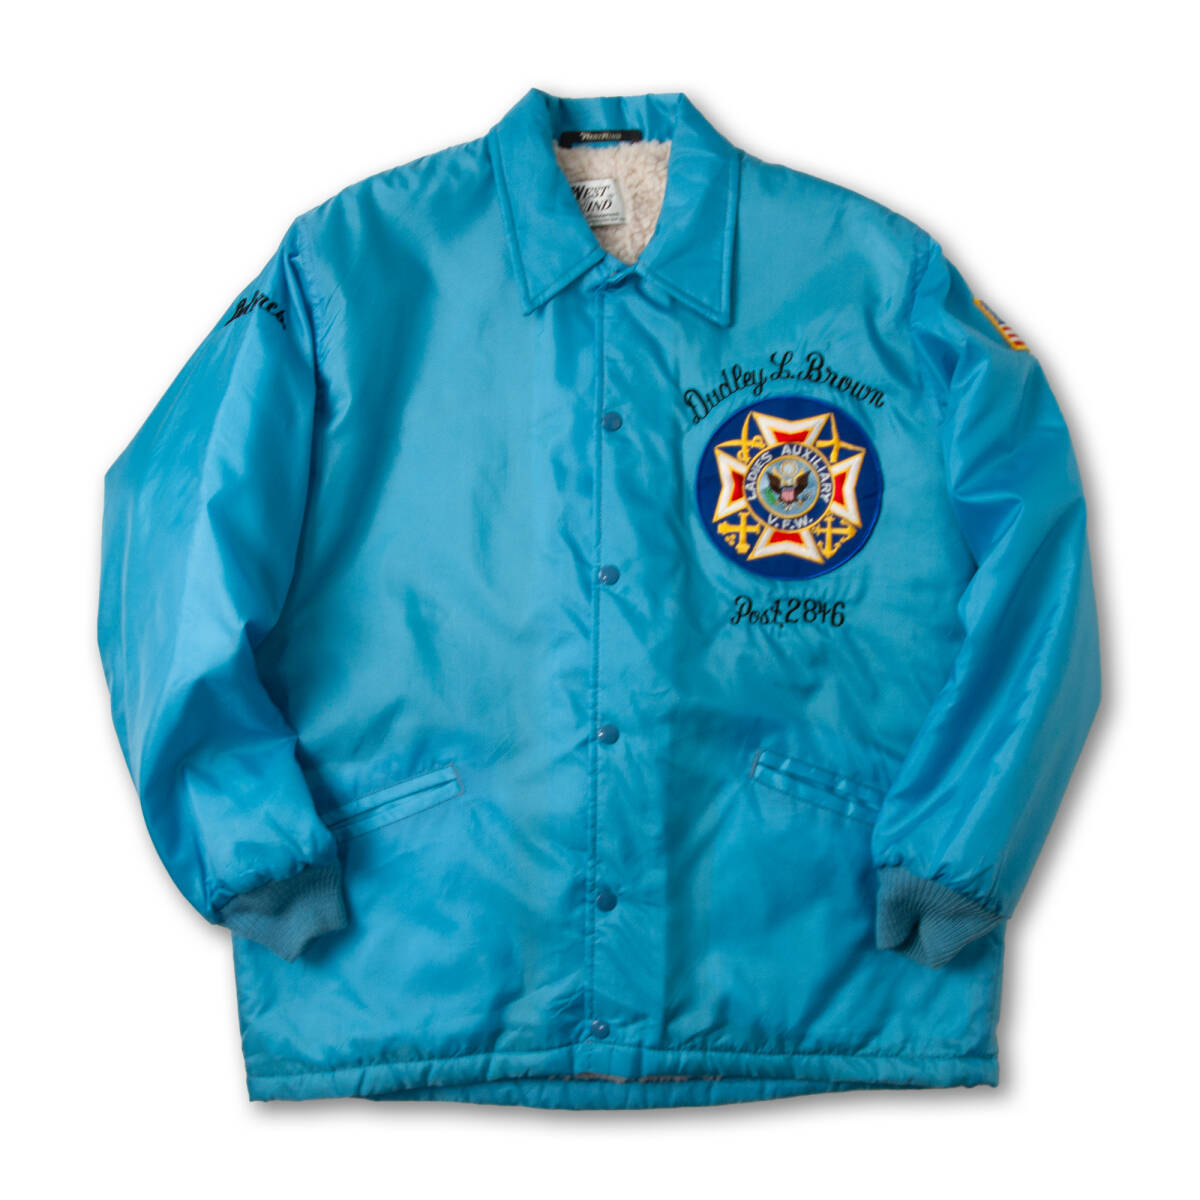 1980s ビンテージ コーチジャケット Ladies Auxiliary V.F.W. Coach jacket Boa Liner